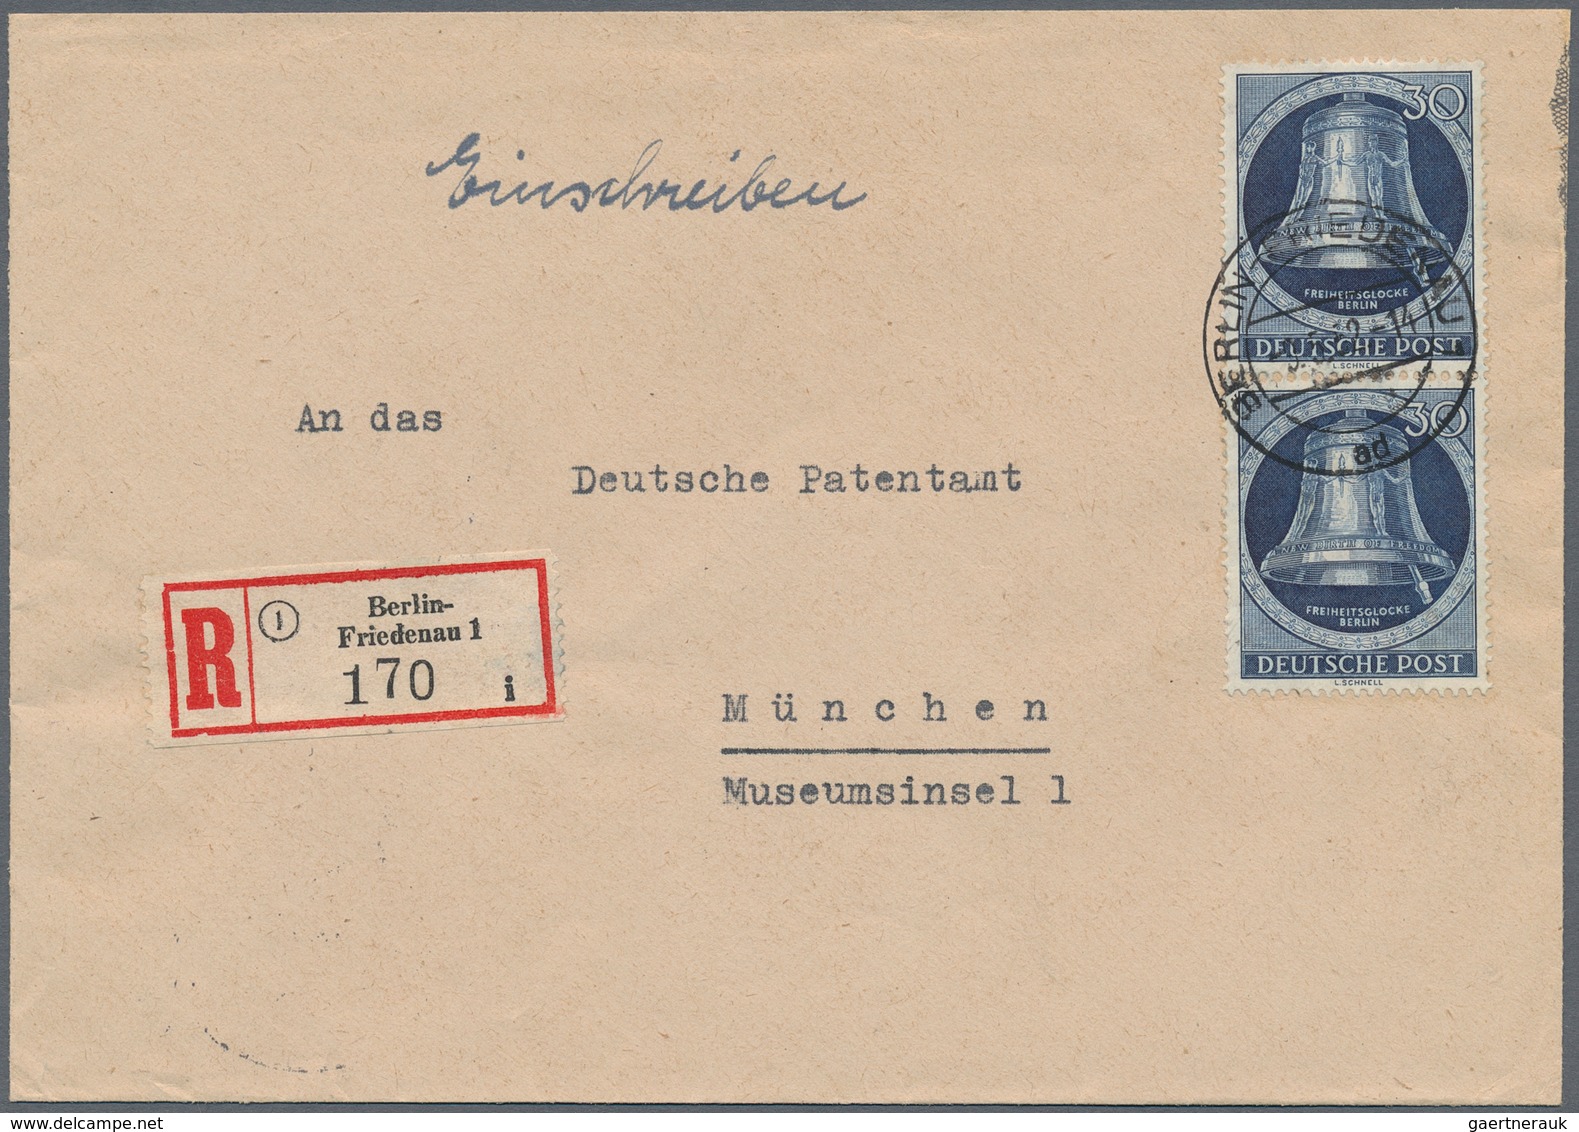 Berlin: 1952, 30 Pfg. Glocke Rechts, Senkrechtes Paar Als Portogerechte Mehrfachfrankatur Auf R-Brie - Storia Postale